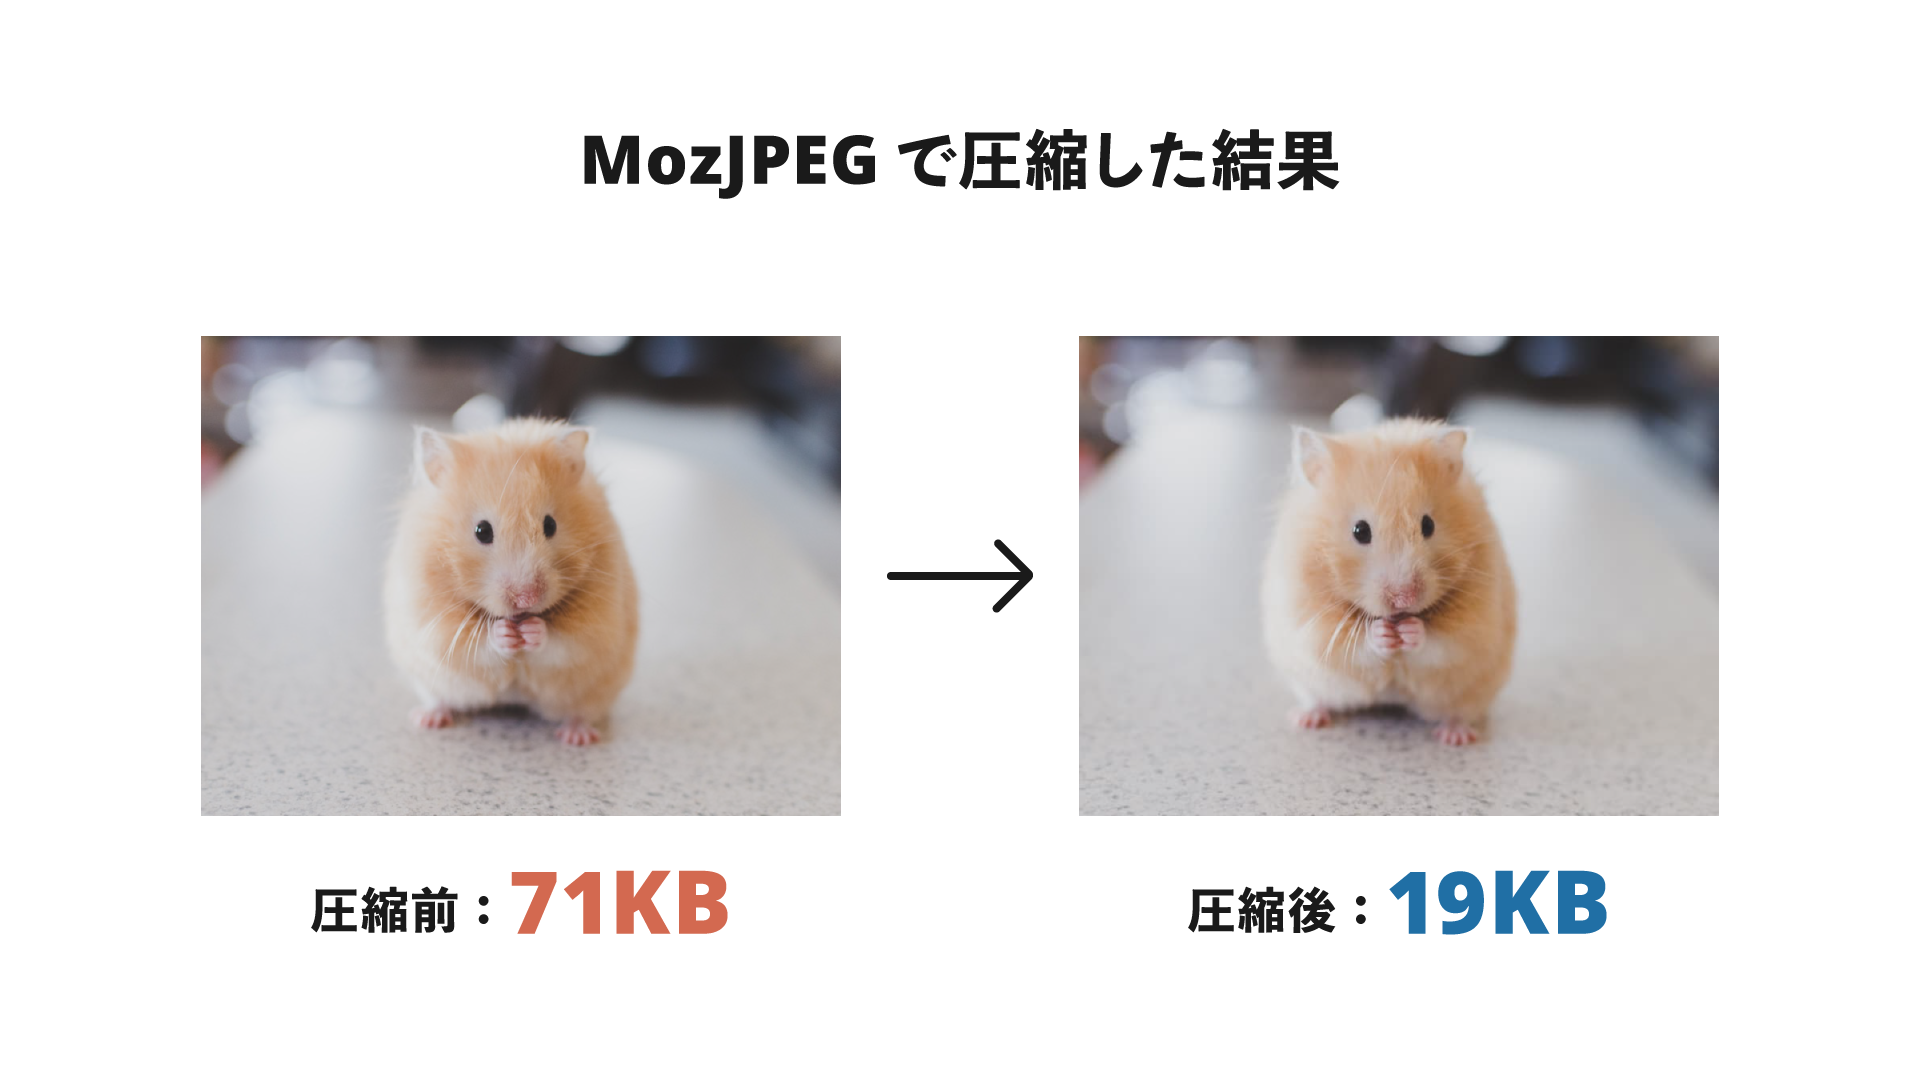 MozJPEGで圧縮した結果、圧縮前が71KBだったのに対し圧縮後は19KBになった